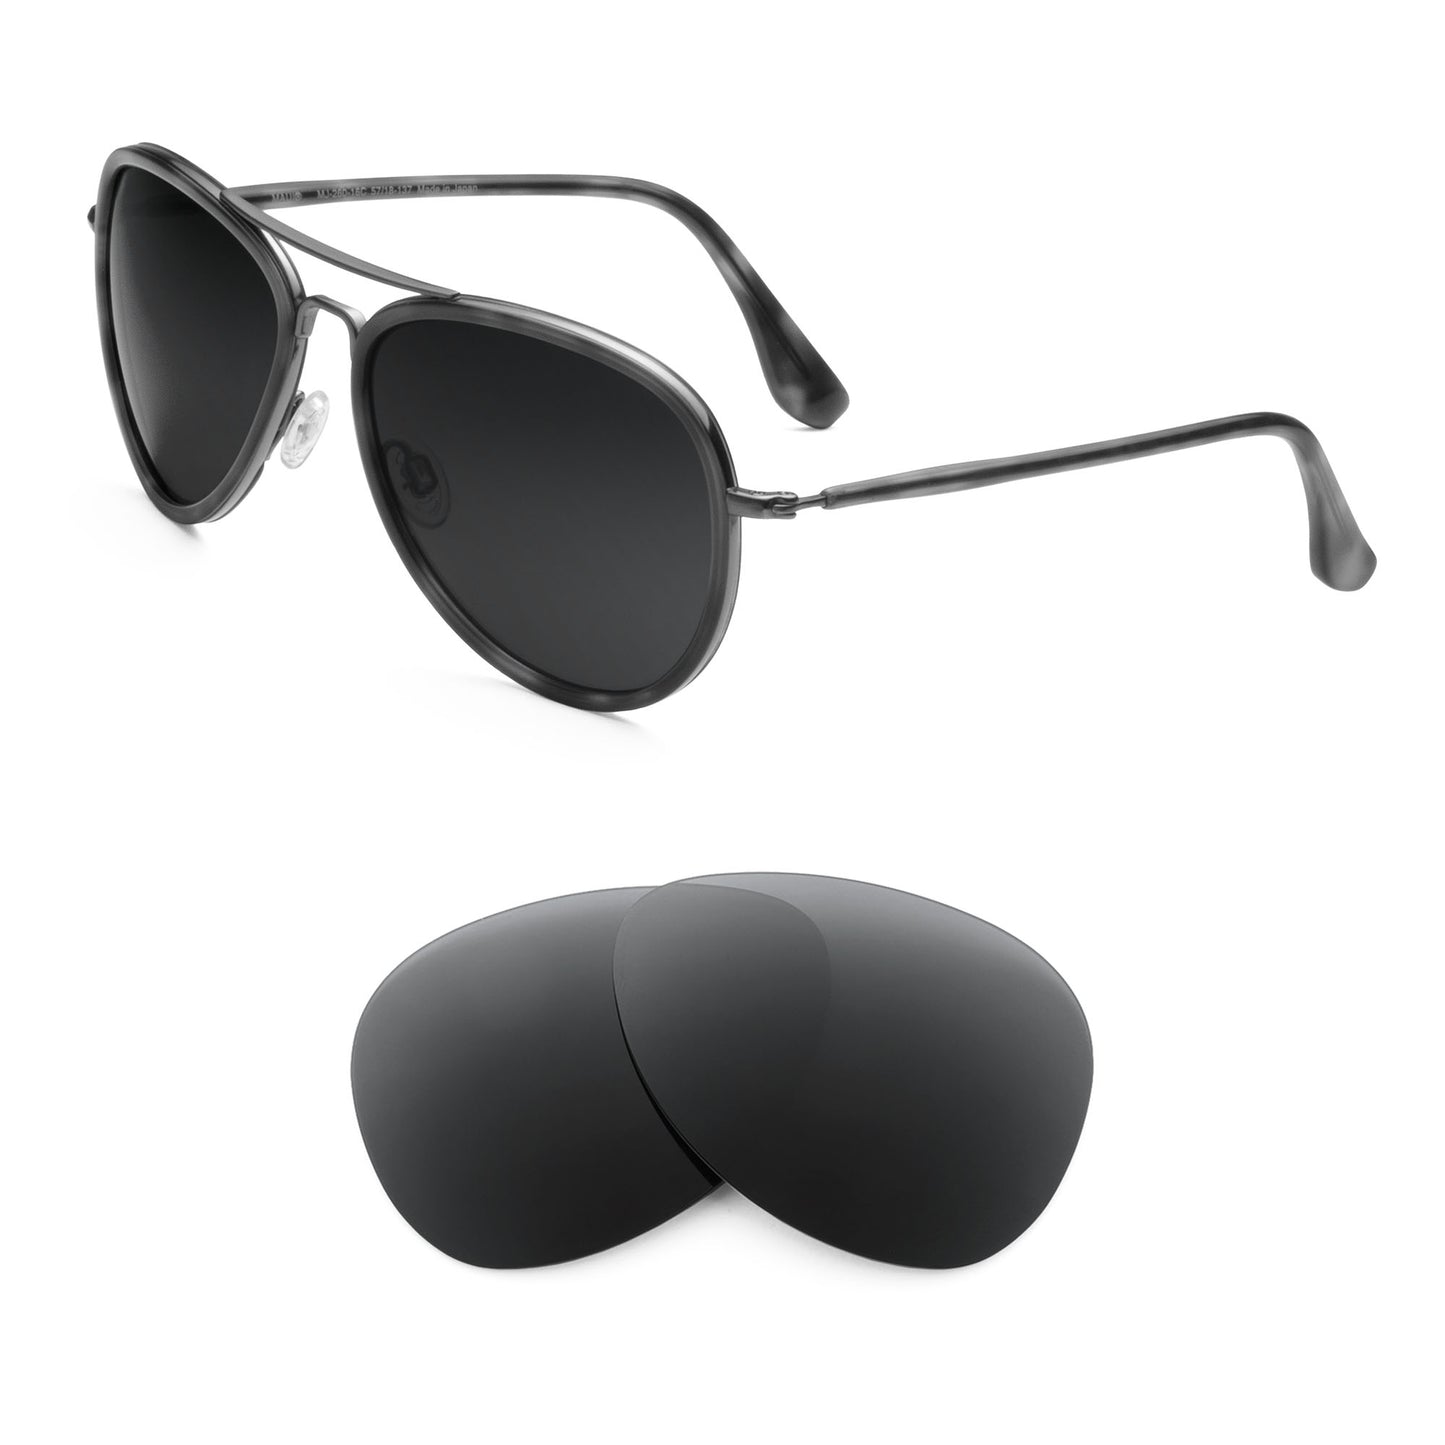 Maui Jim Honomanu MJ260 sunglasses with replacement lenses